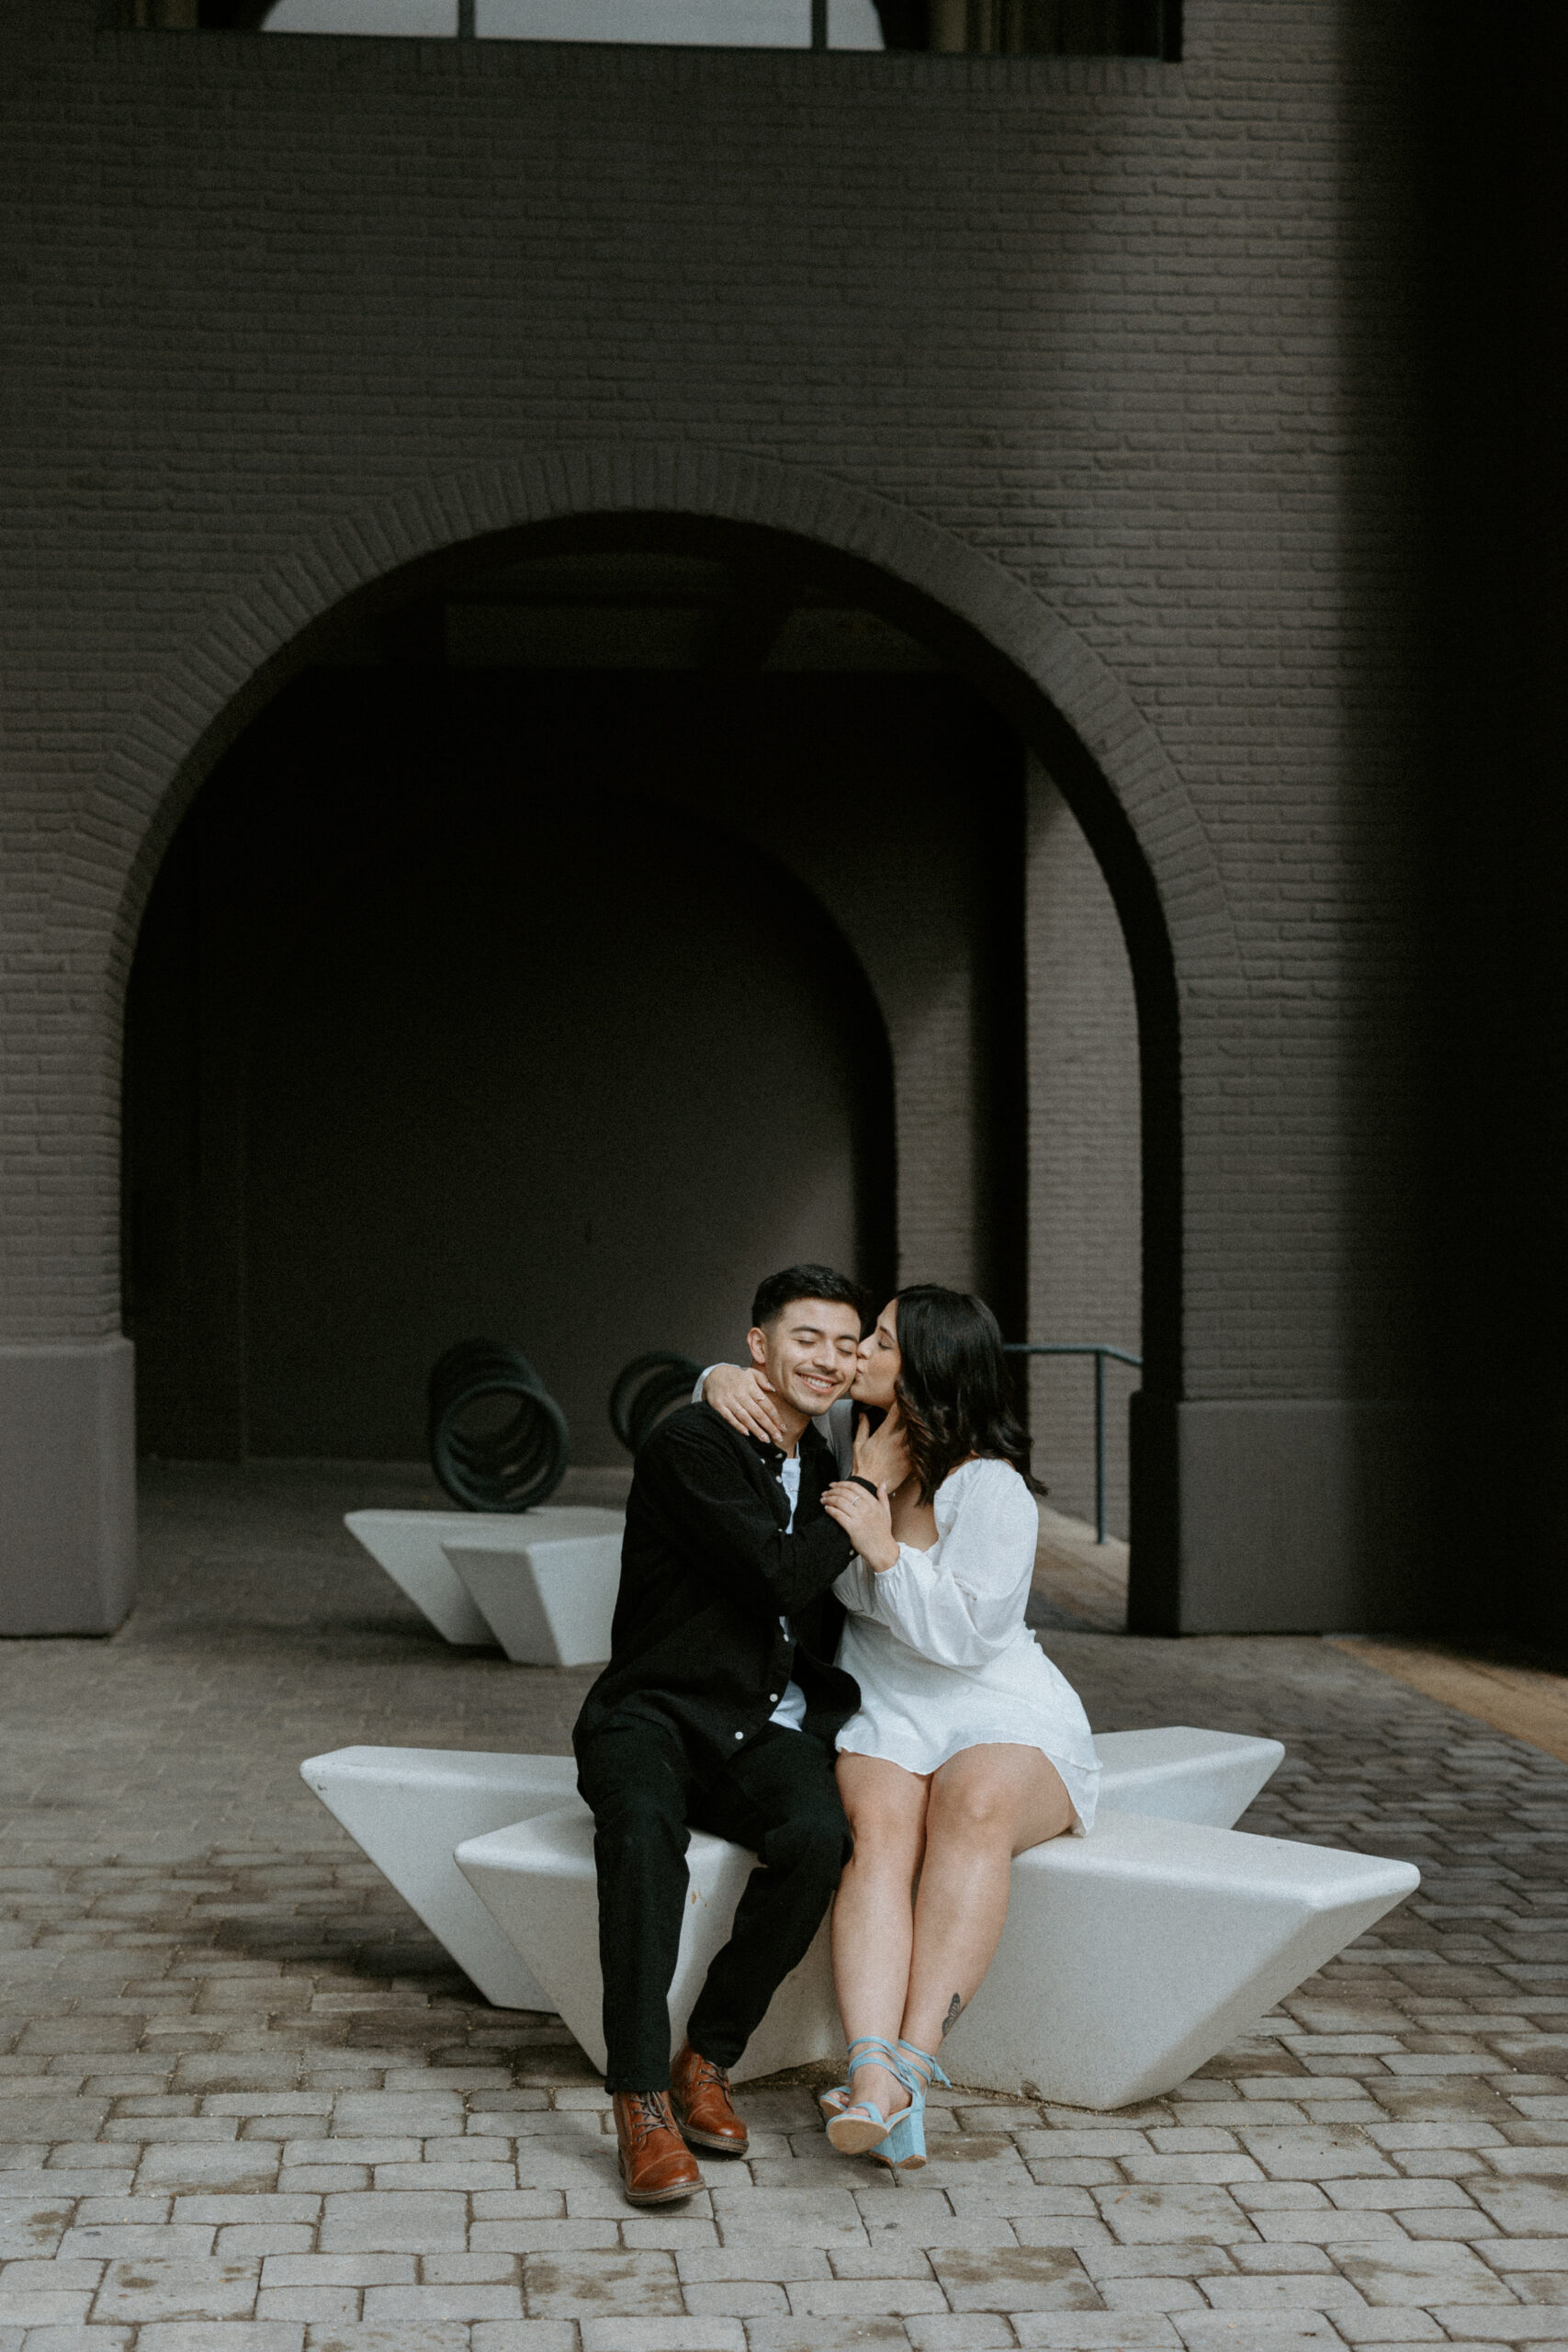 downtown couple photoshoot women kissing man on cheek